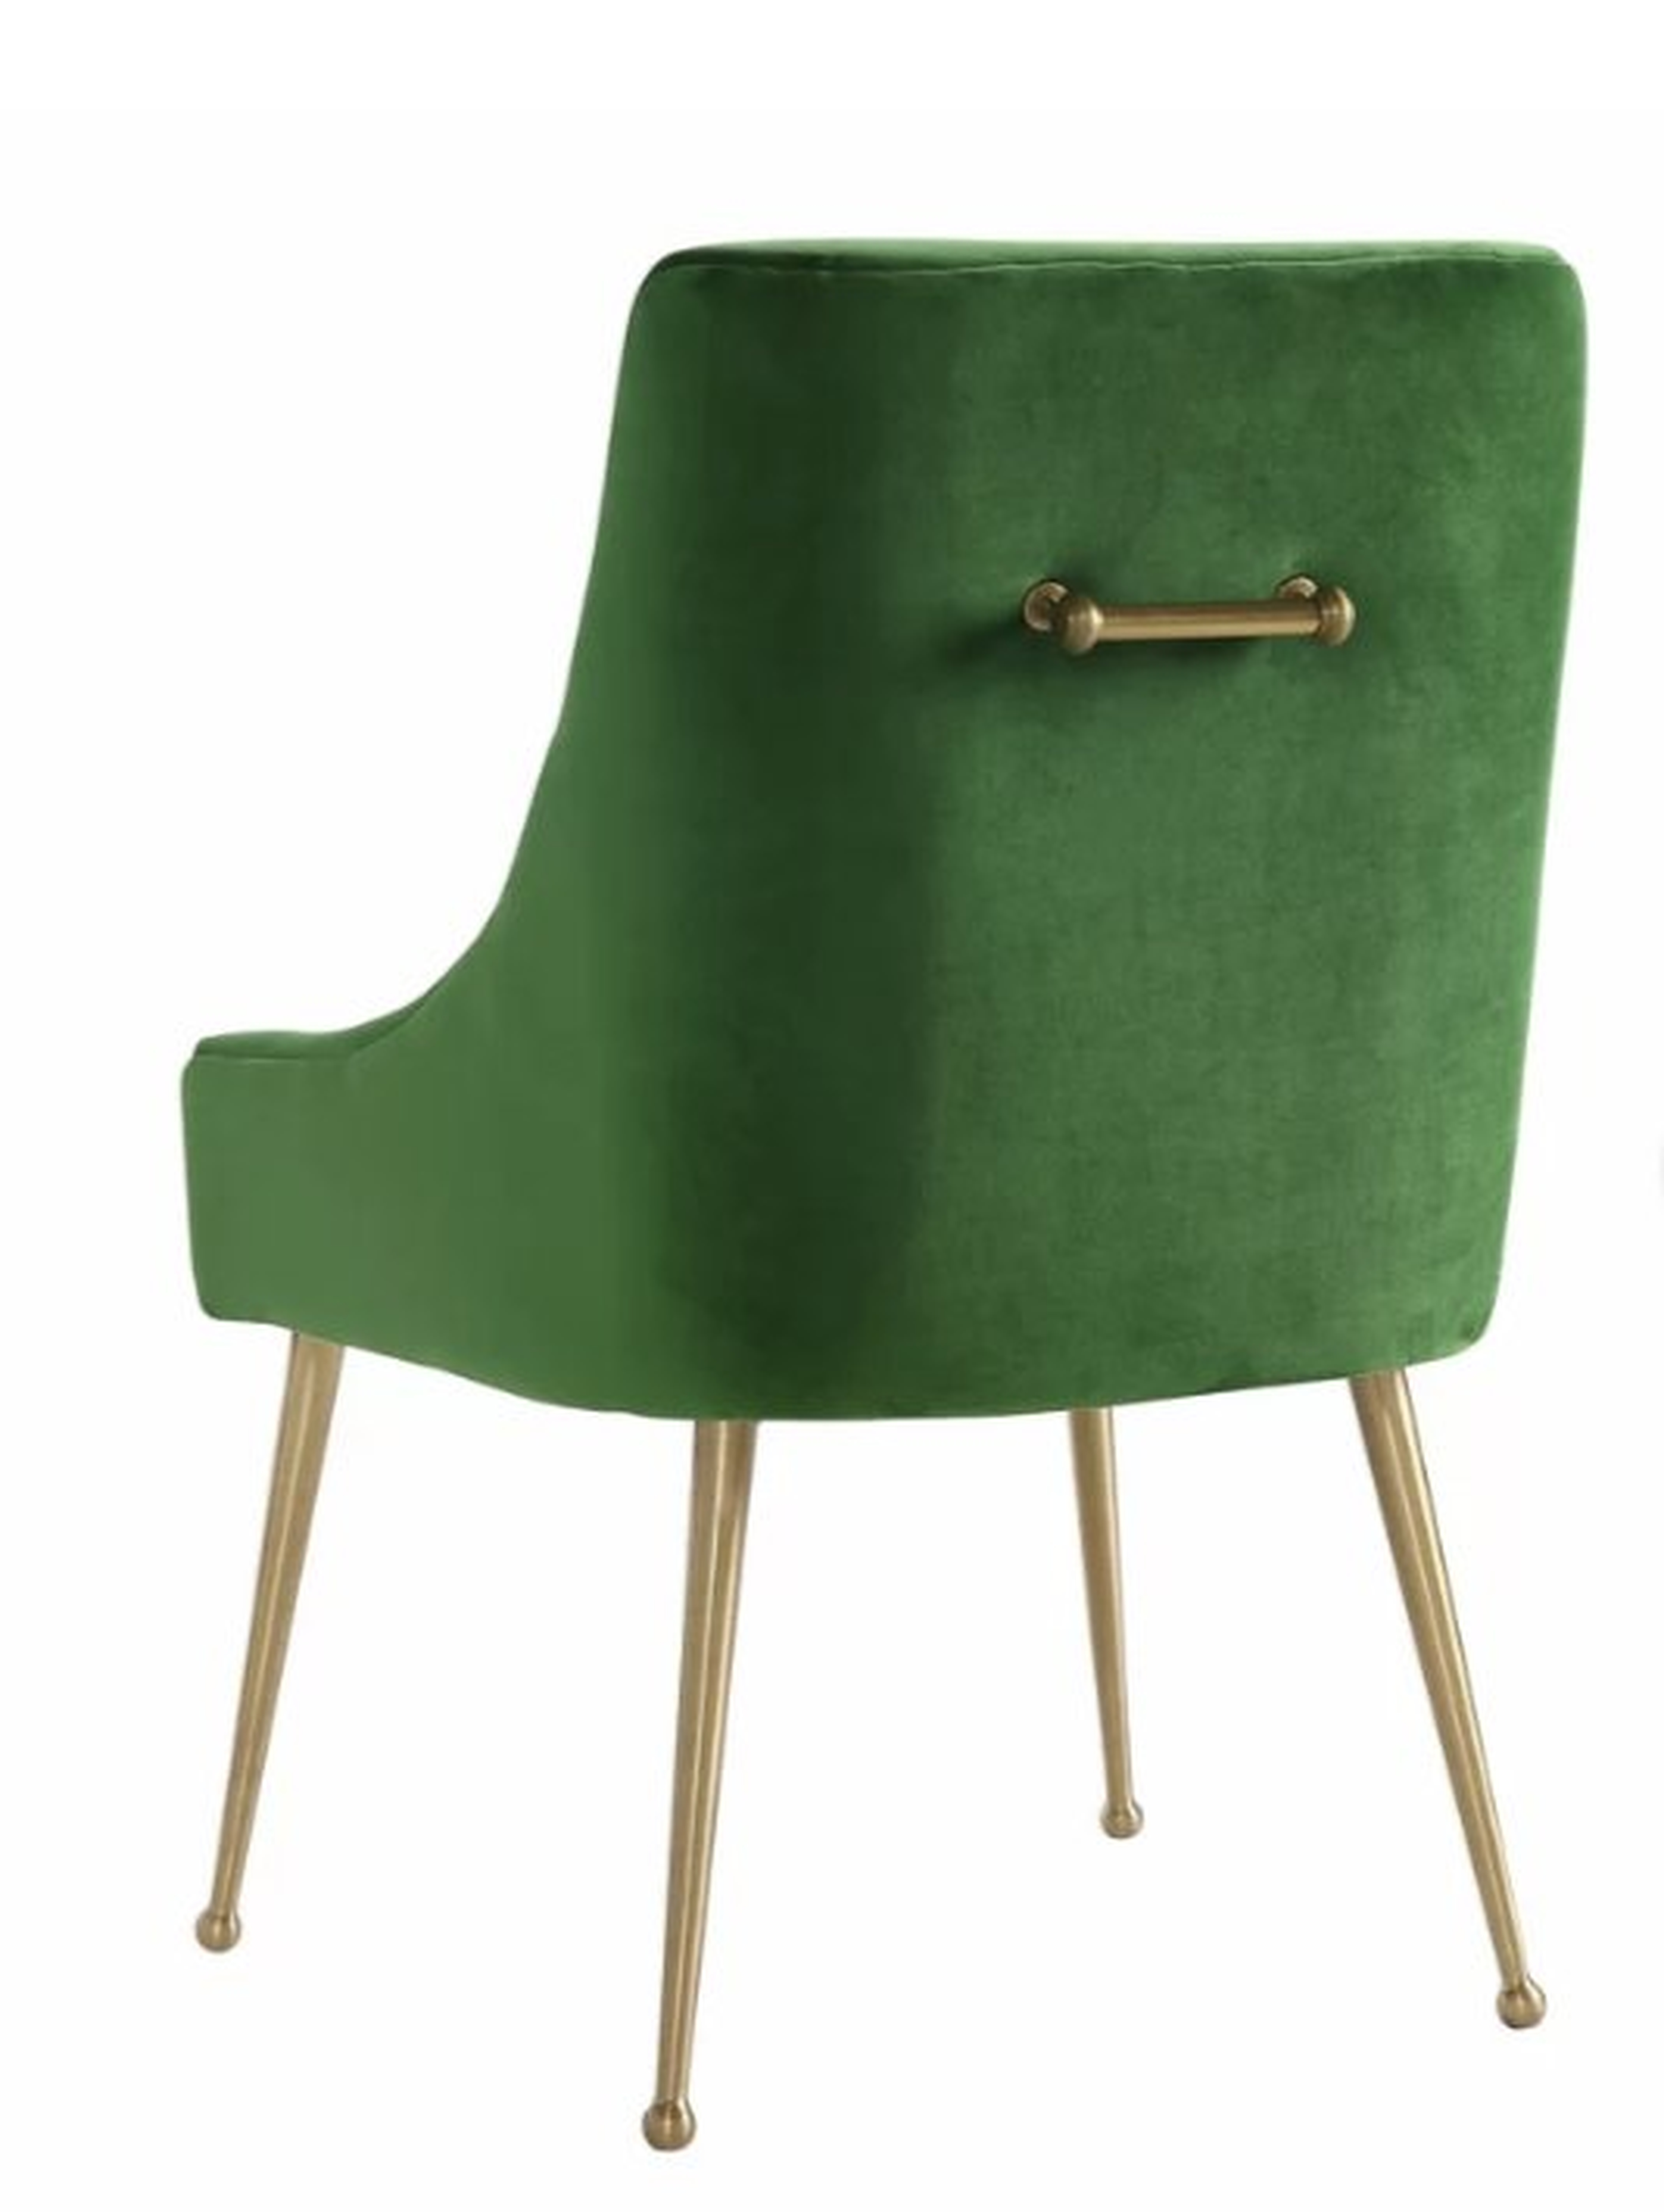 Patrick Upholstered Dining Chair - AllModern